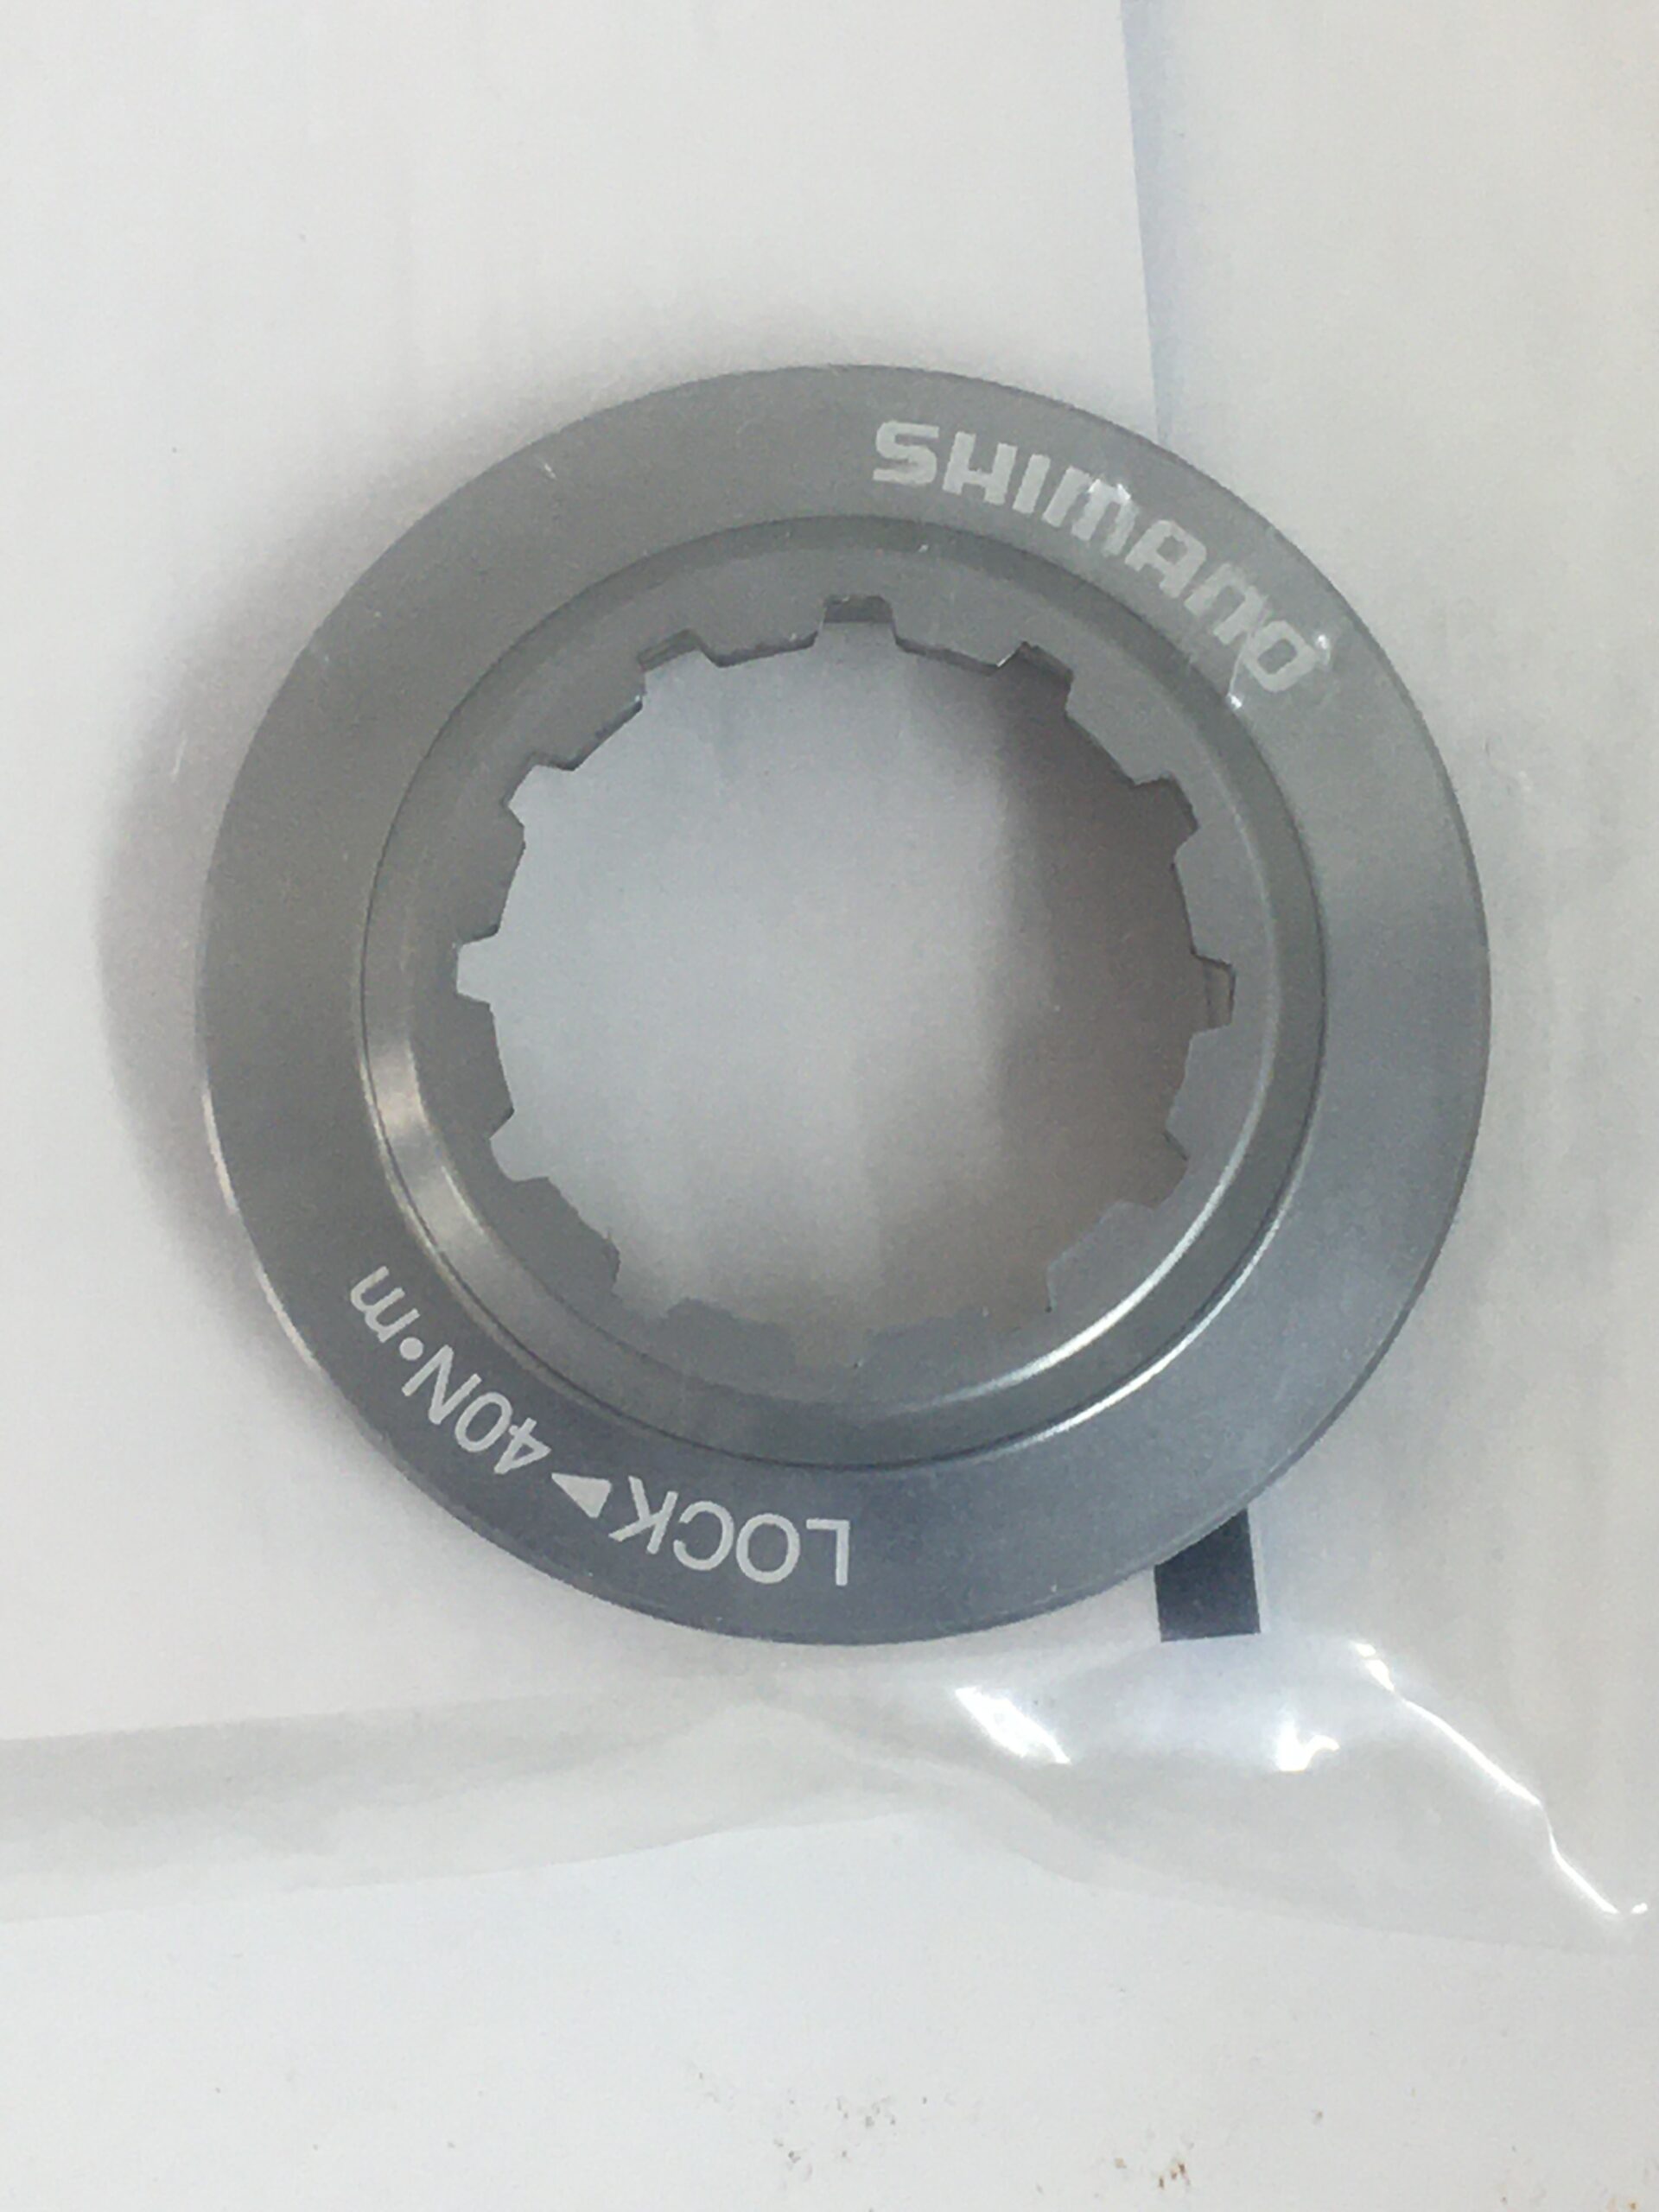 Shimano SM-RT900 lock ring & washer - Just Riding Along